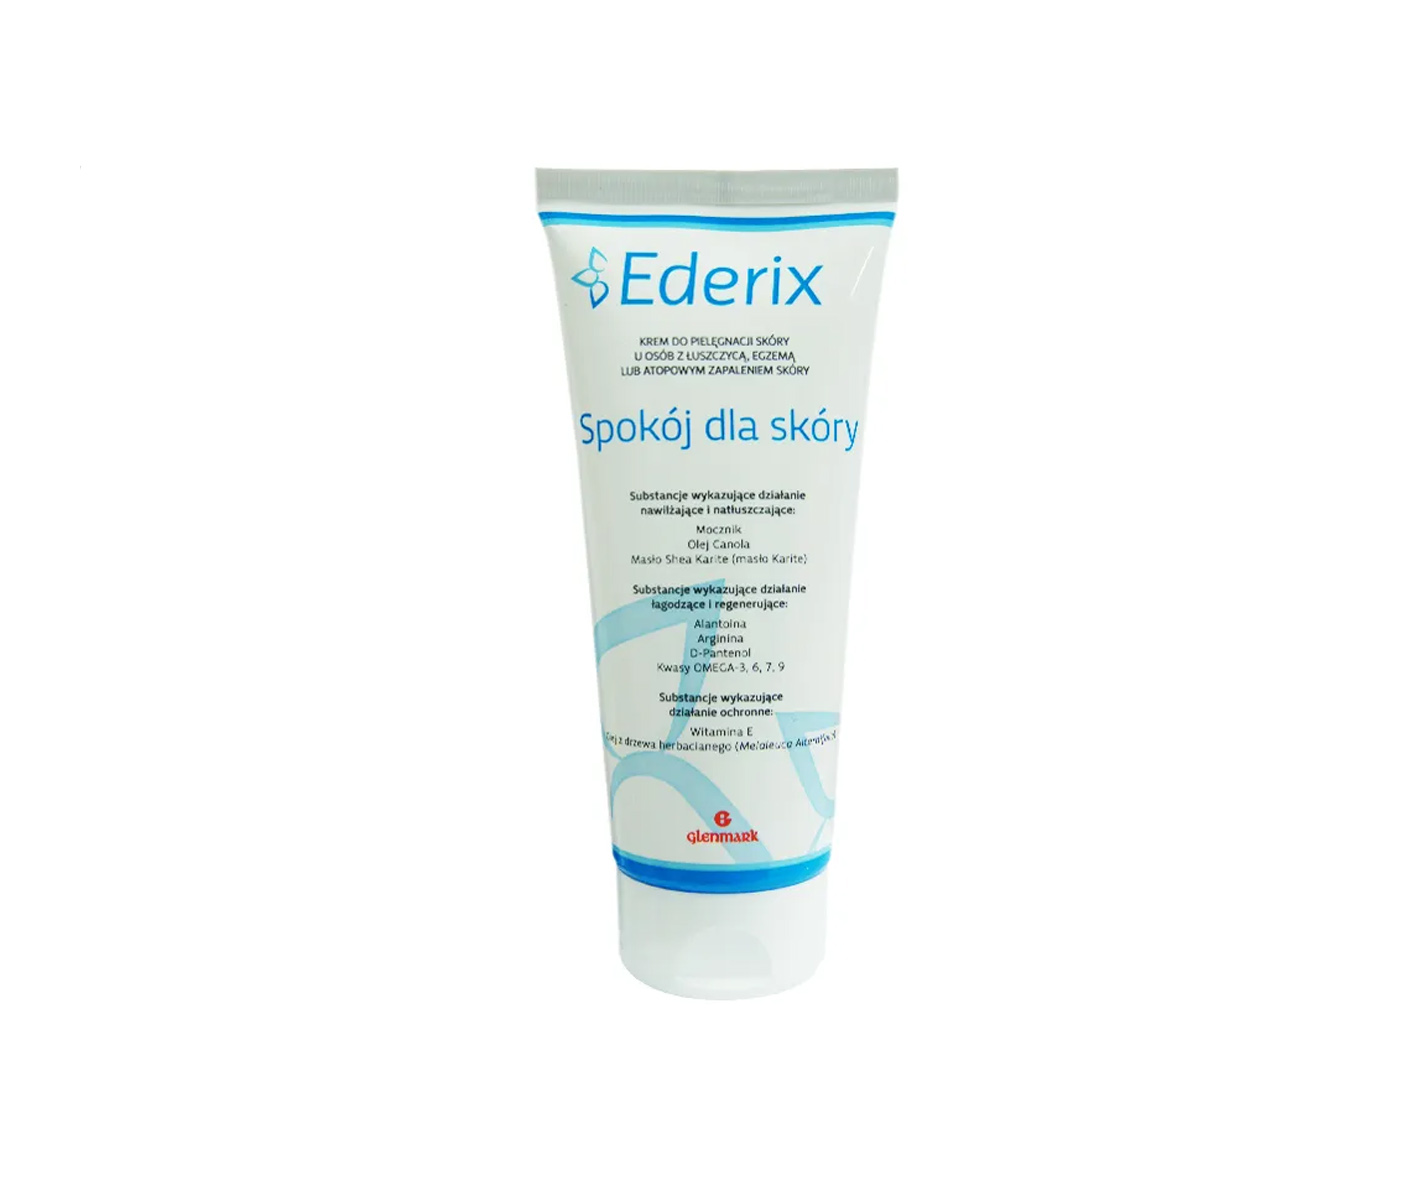 Ederix, Spokój dla skóry, krem do pielęgnacji skóry problematycznej